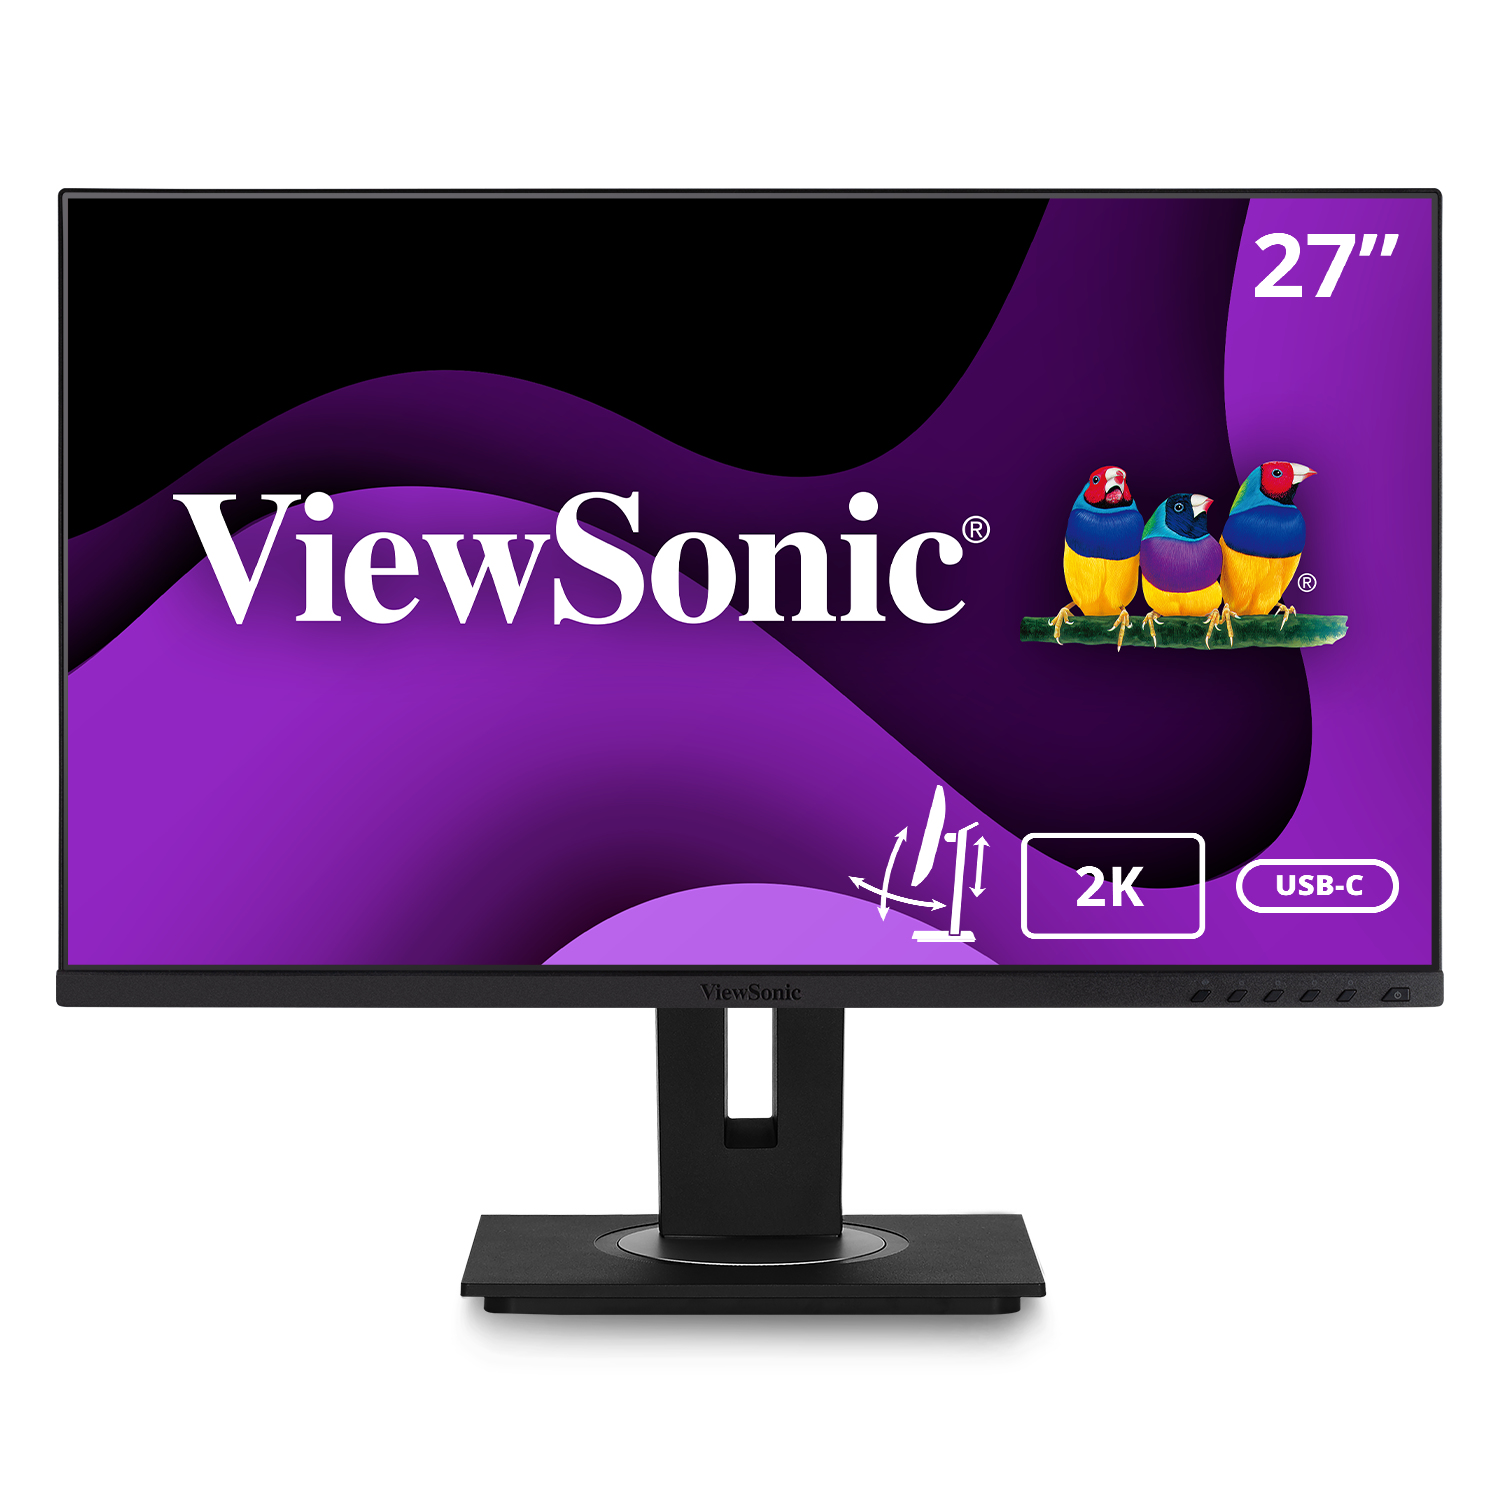 Viewsonic VG2756-2K computer monitor